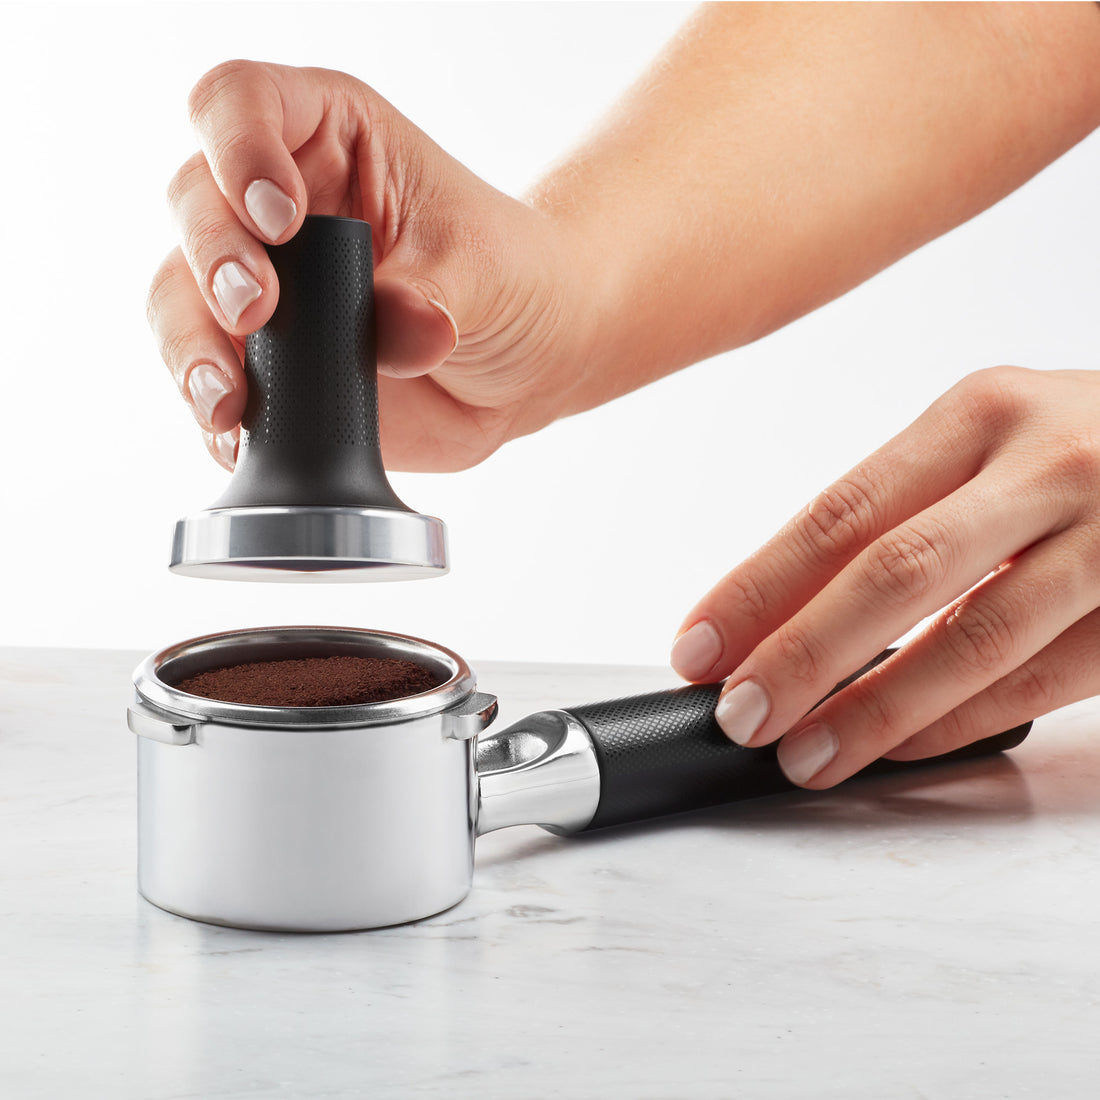 KitchenAid Espresso Maker in Black Matte